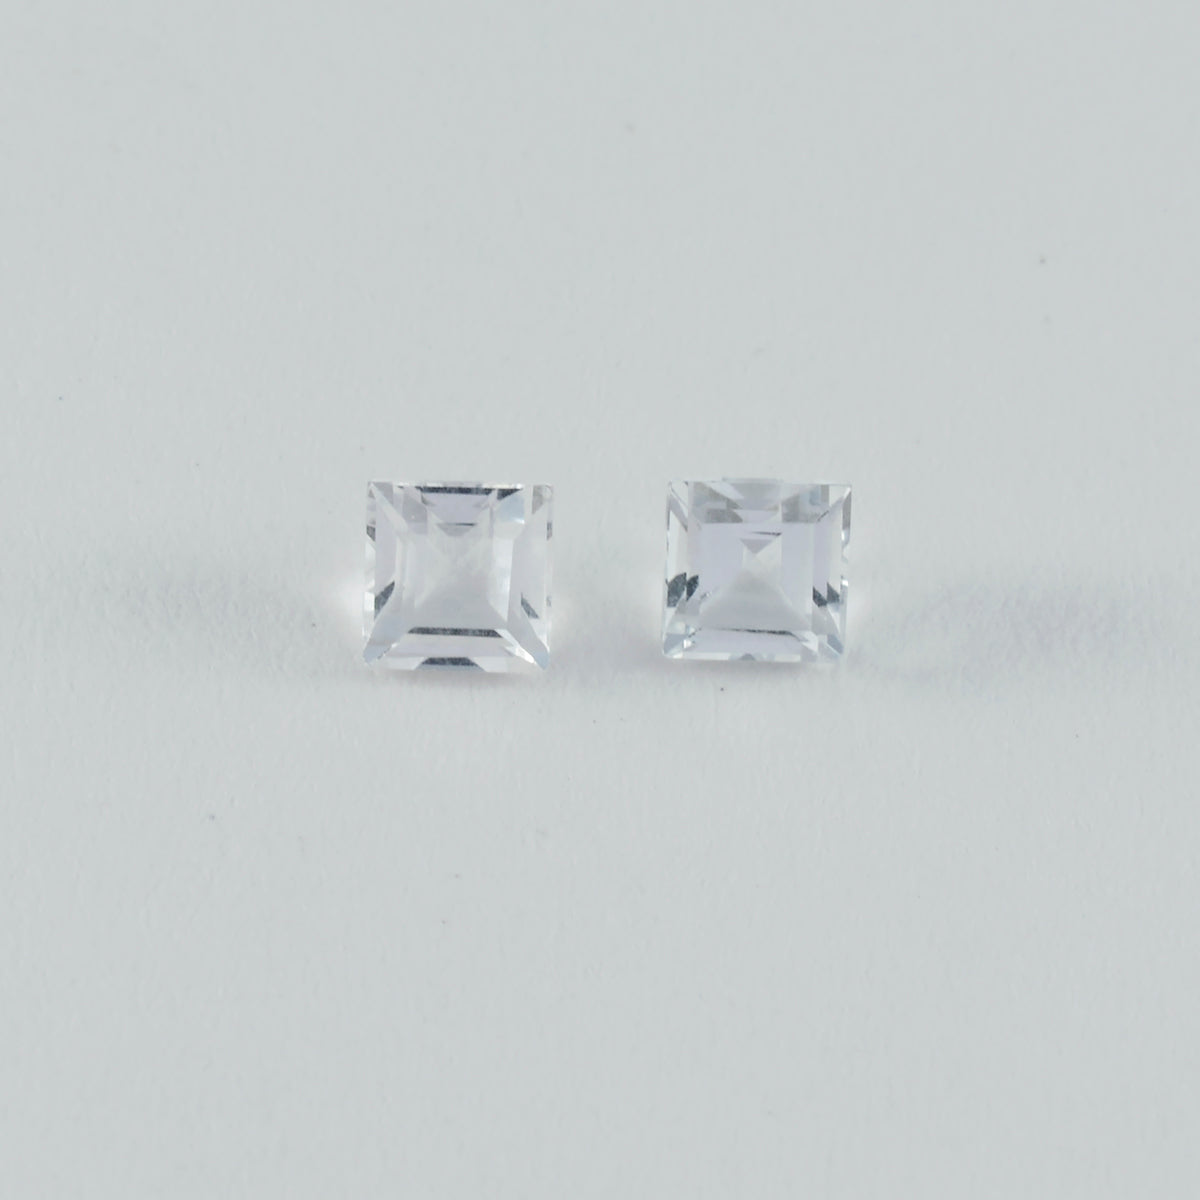 riyogems 1 шт., белый кристалл кварца, граненый 6x6 мм, квадратная форма, красивое качество, свободный камень